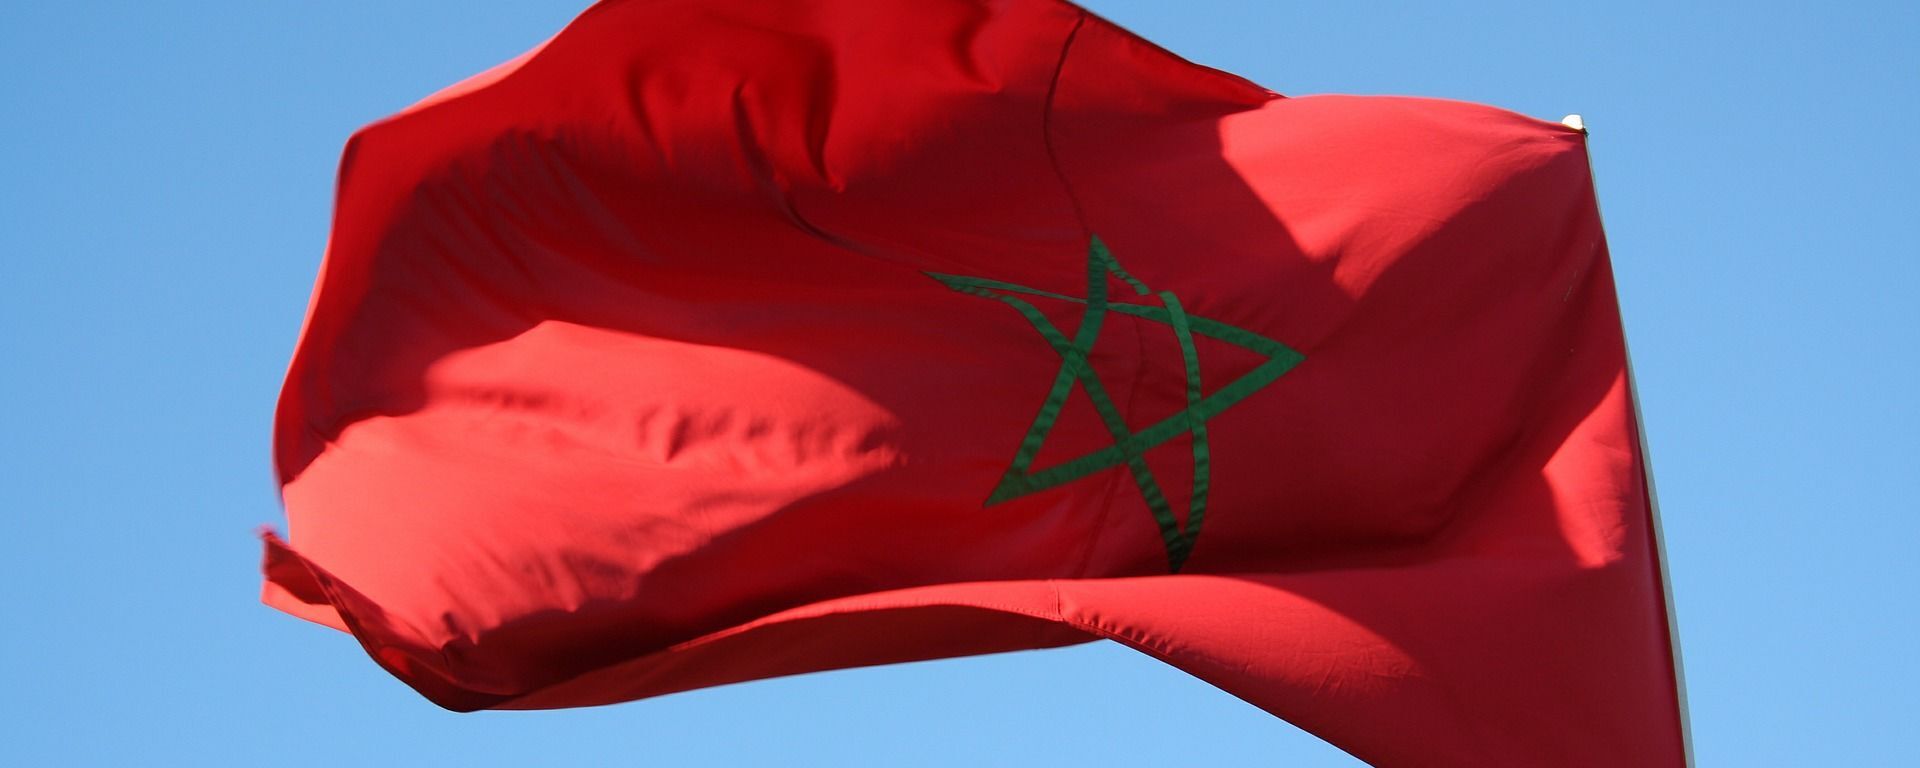 Bandera de Marruecos - Sputnik Mundo, 1920, 31.03.2021